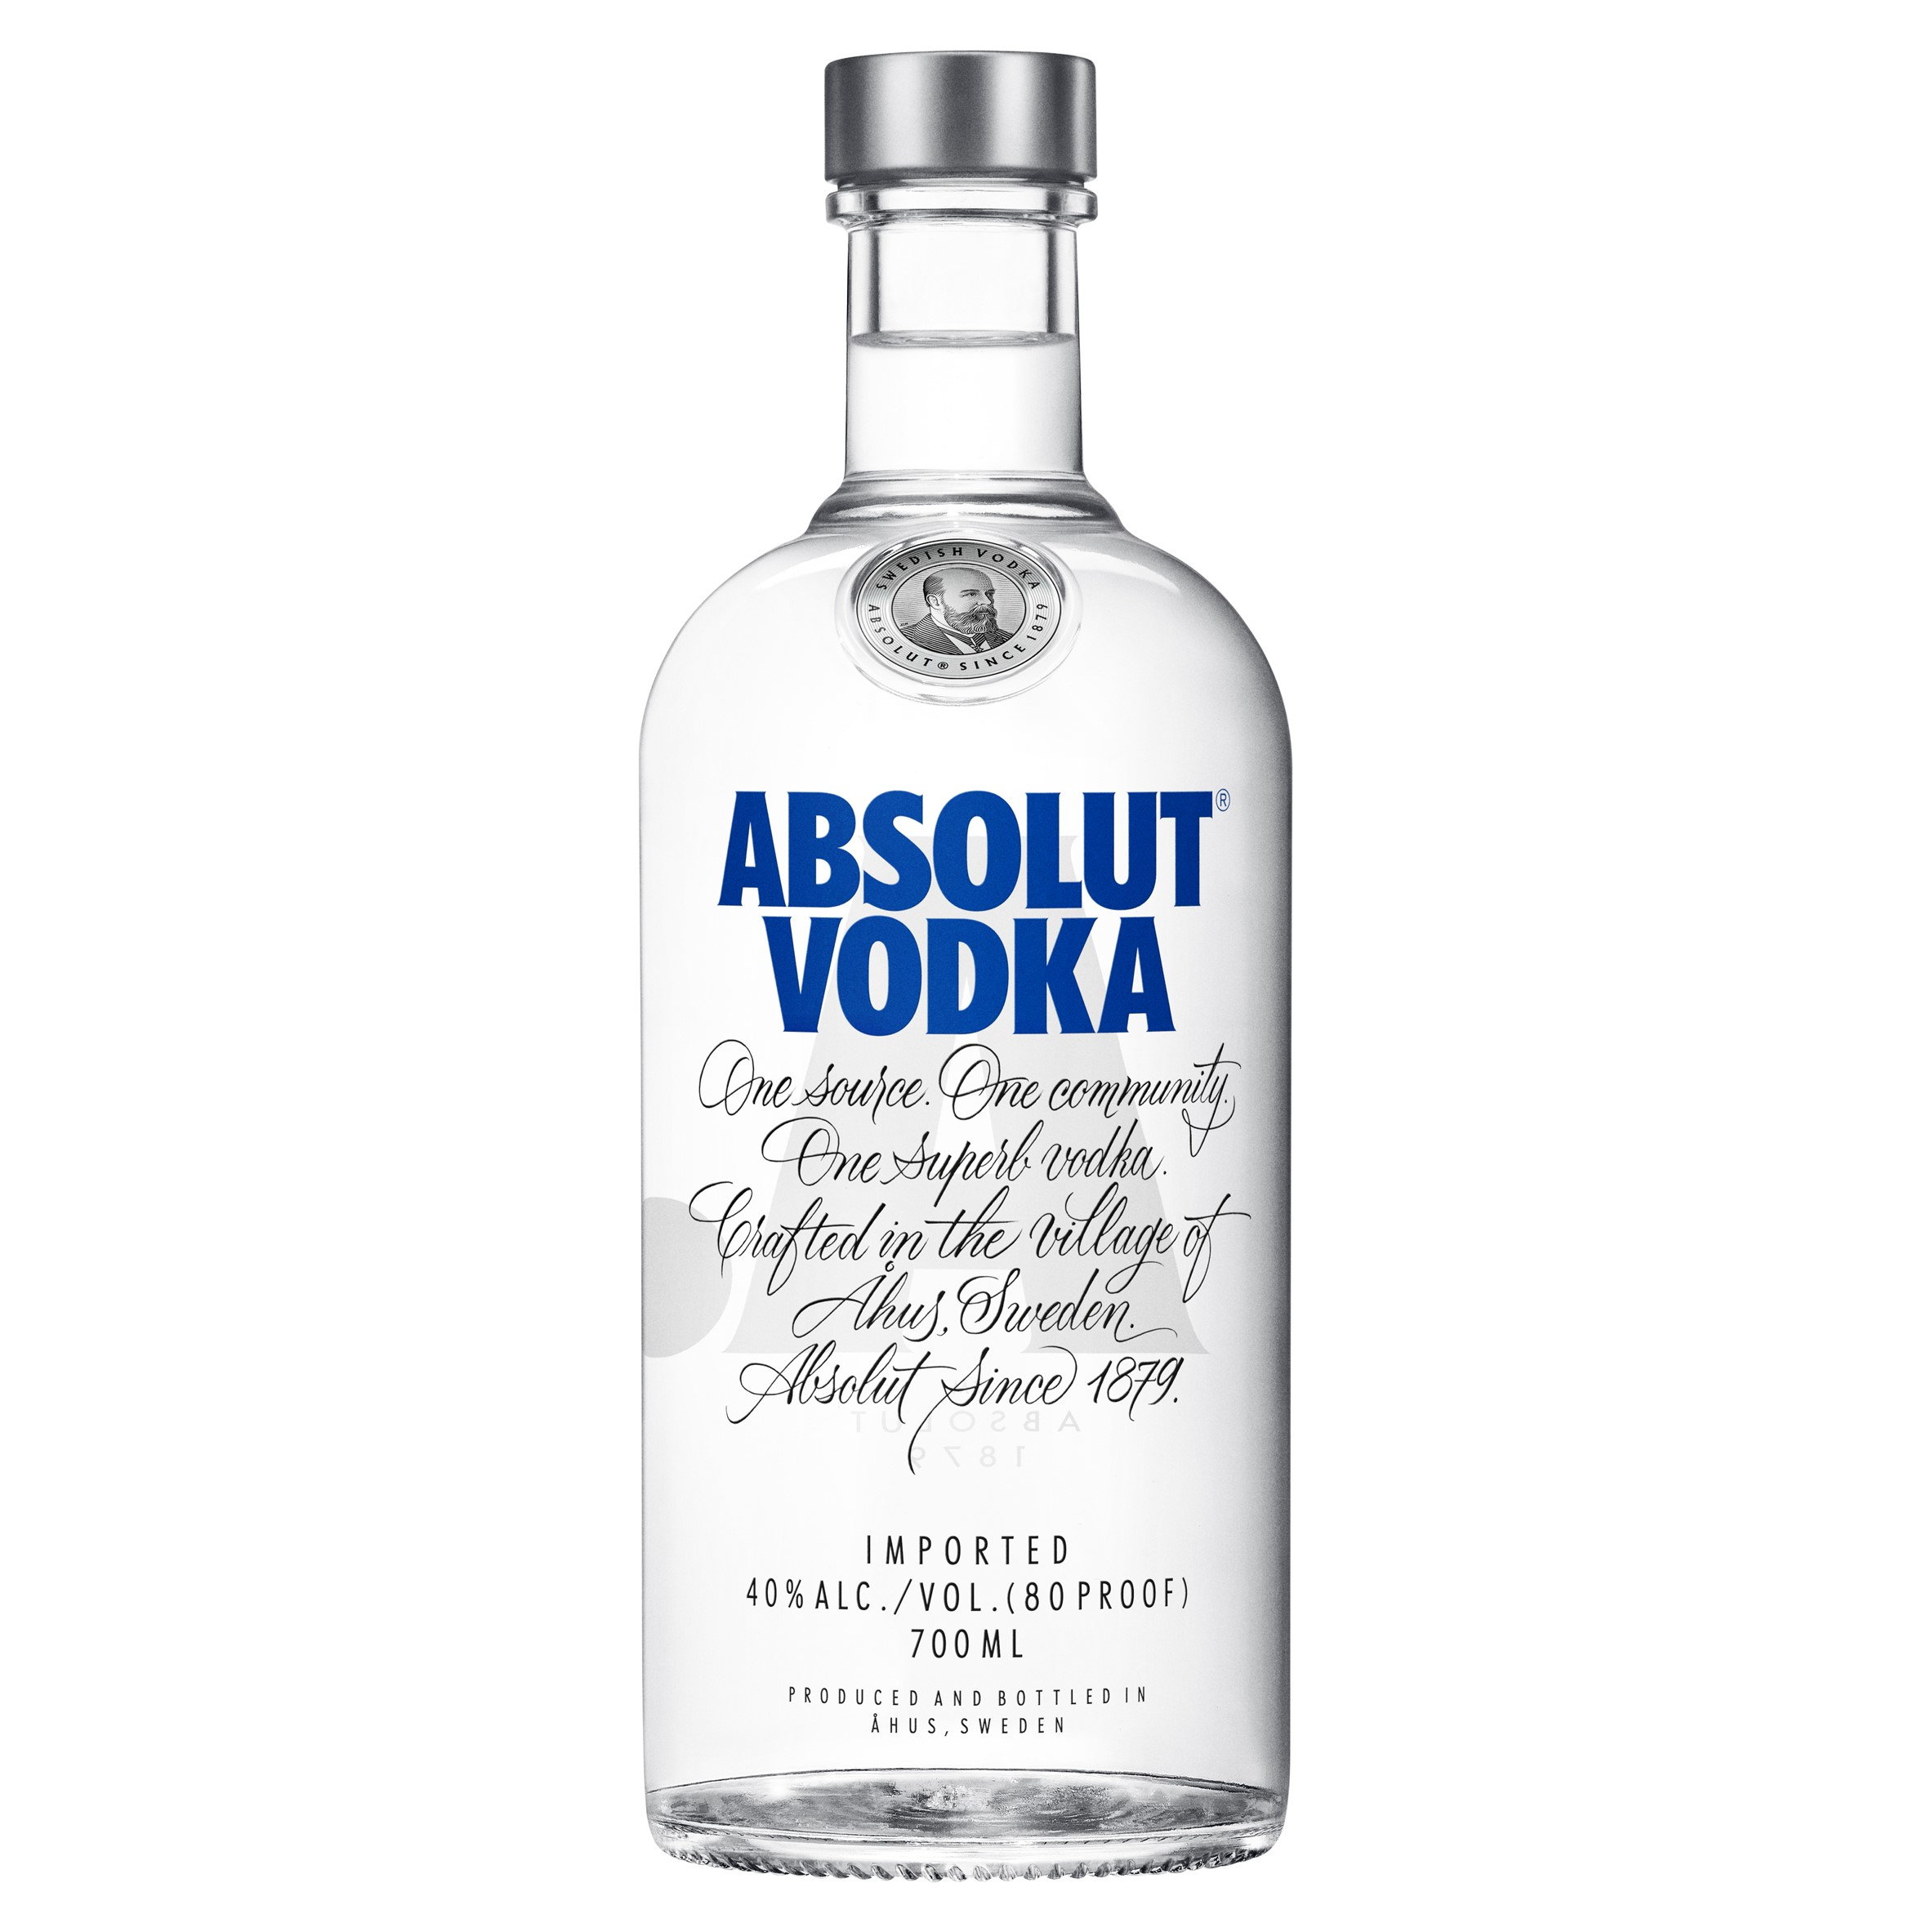 A bottle of Absolut Vodka 